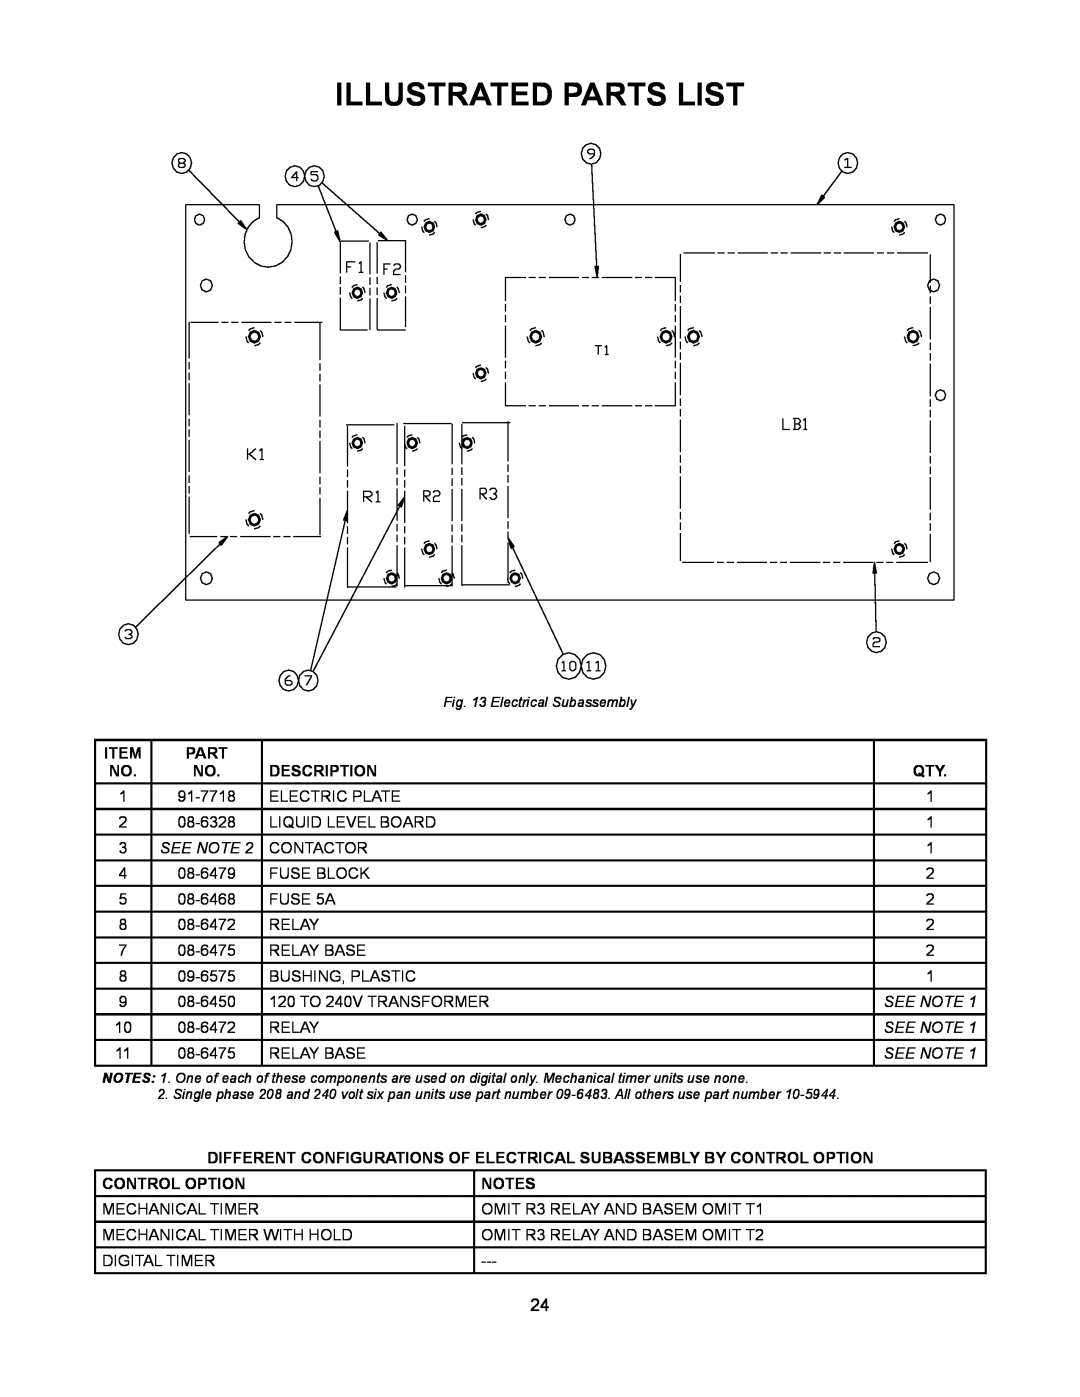 Market Forge Industries STEAM-TECH ELECTRIC STEAM COOKER, ST-6E, ST-3E Illustrated Parts List, Description, Control Option 